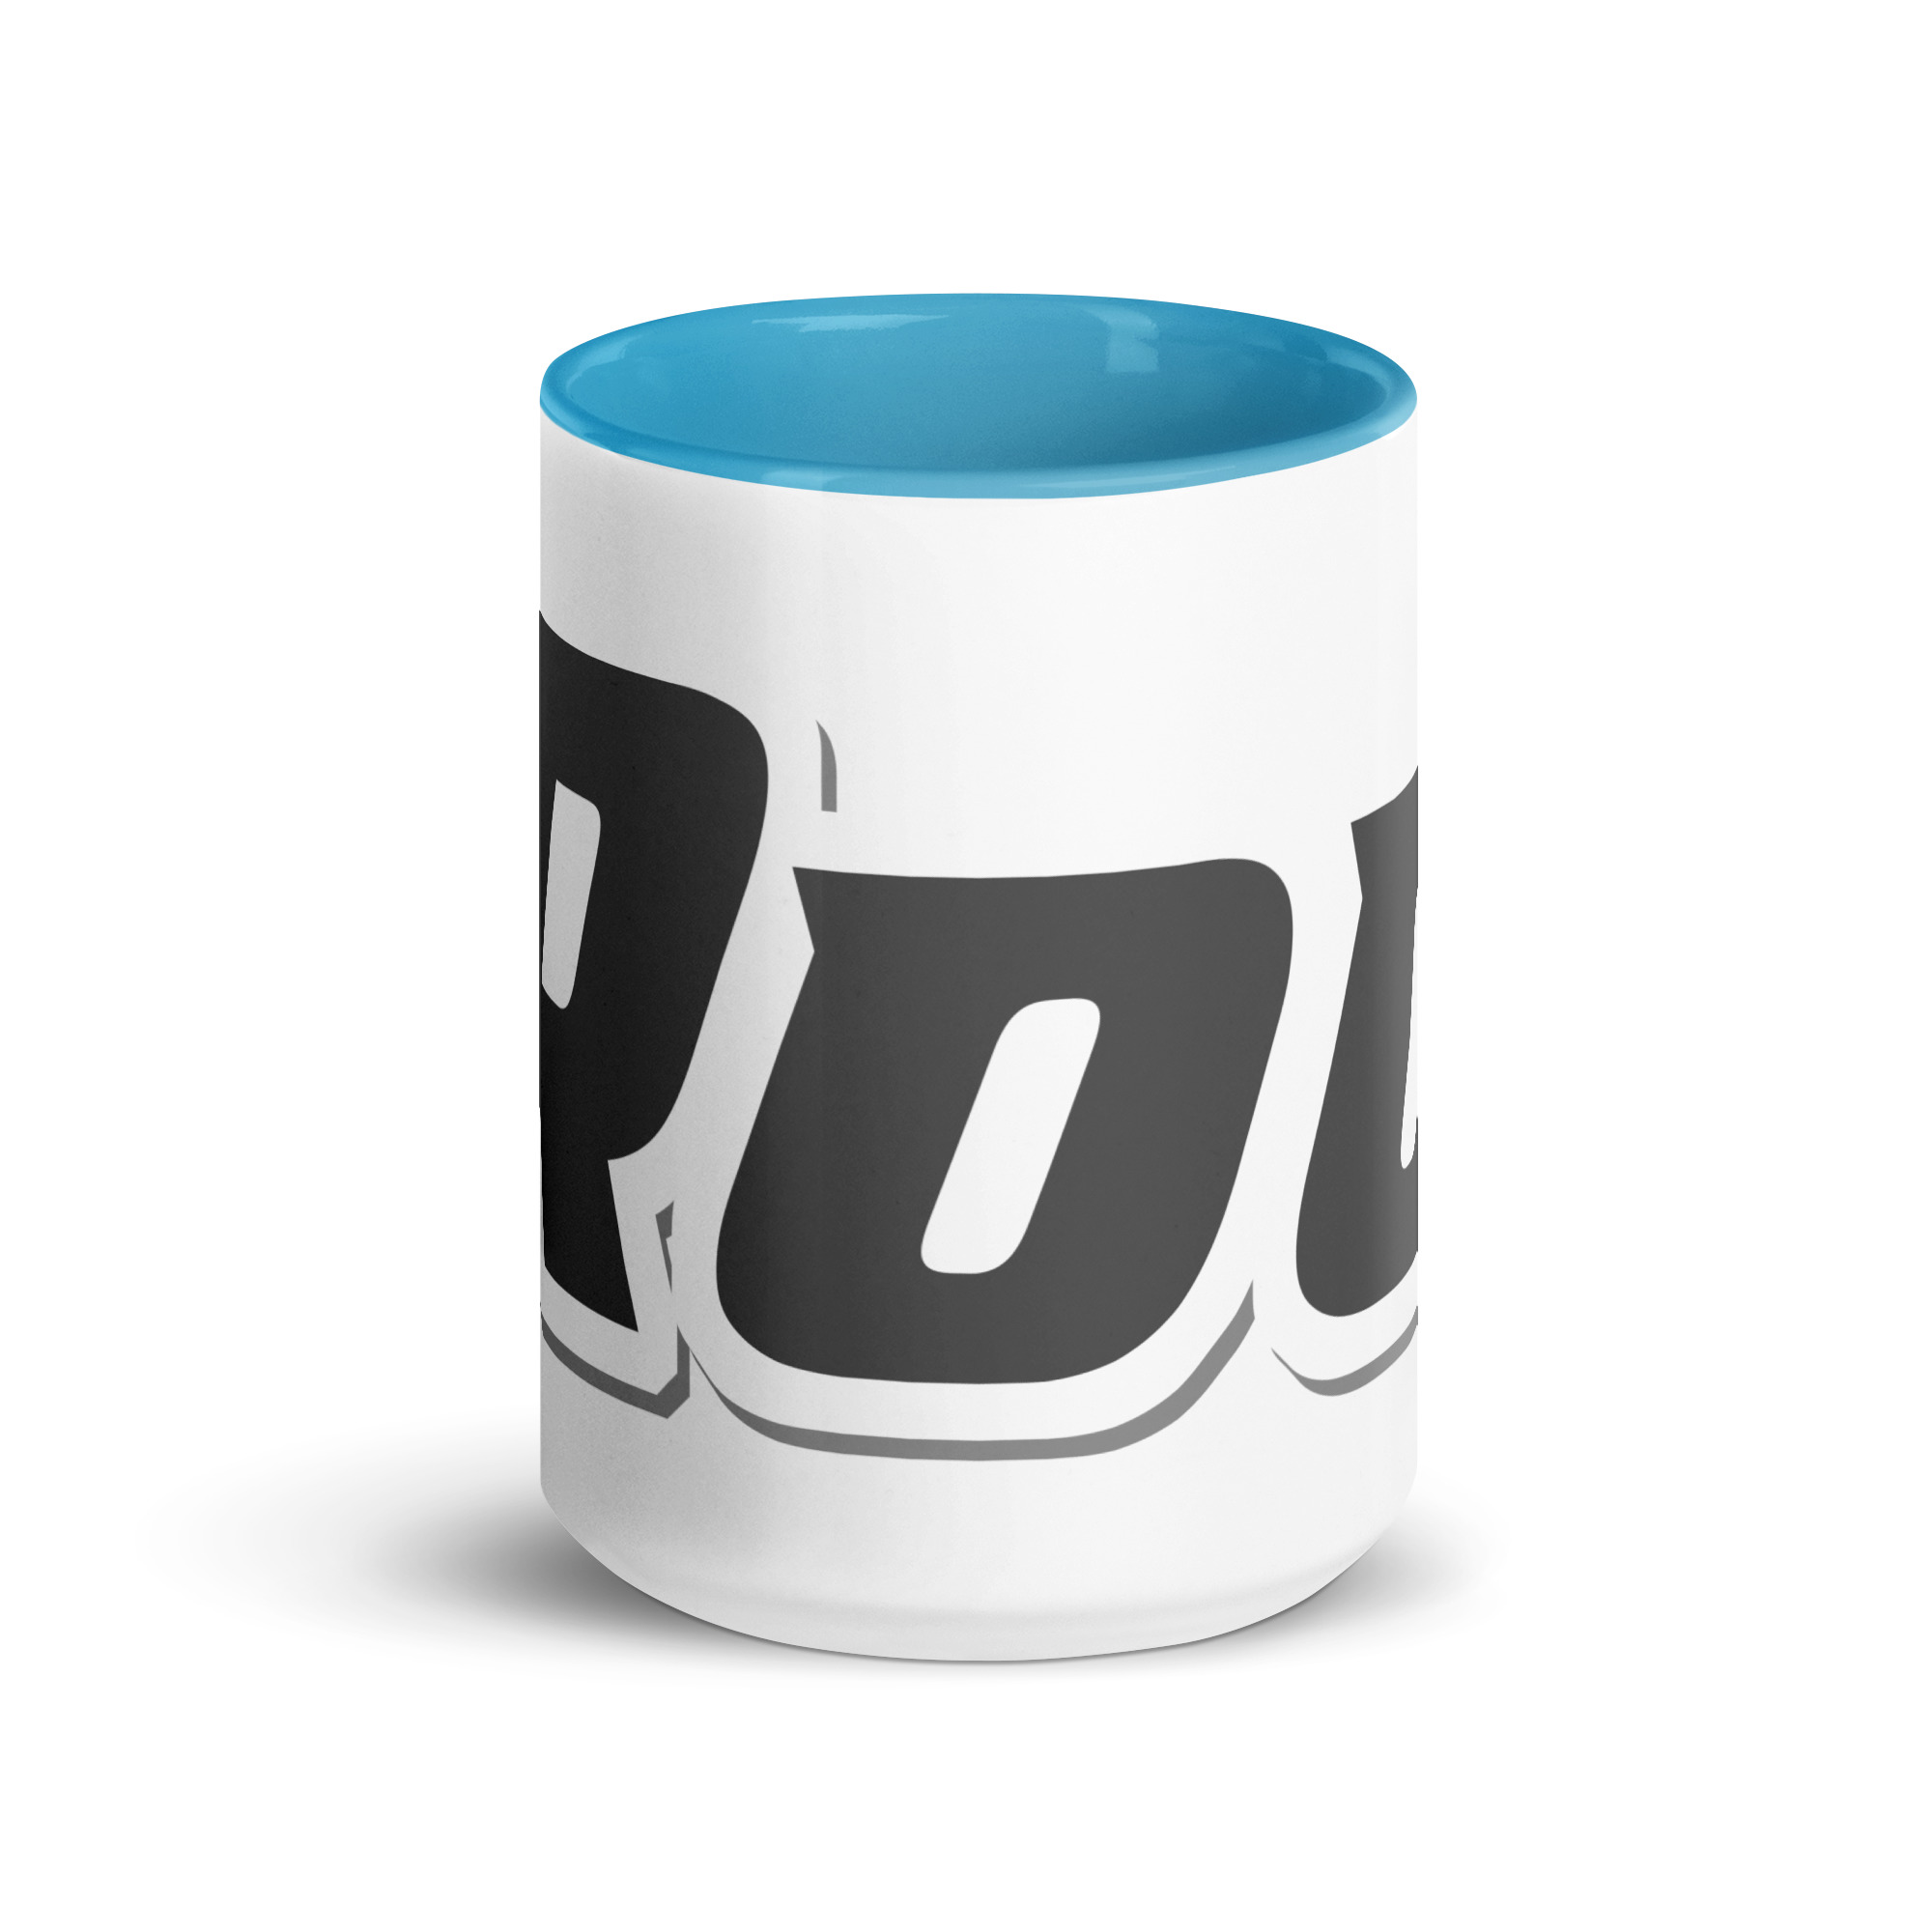 white-ceramic-mug-with-color-inside-blue-15-oz-front-6525b50609195.jpg